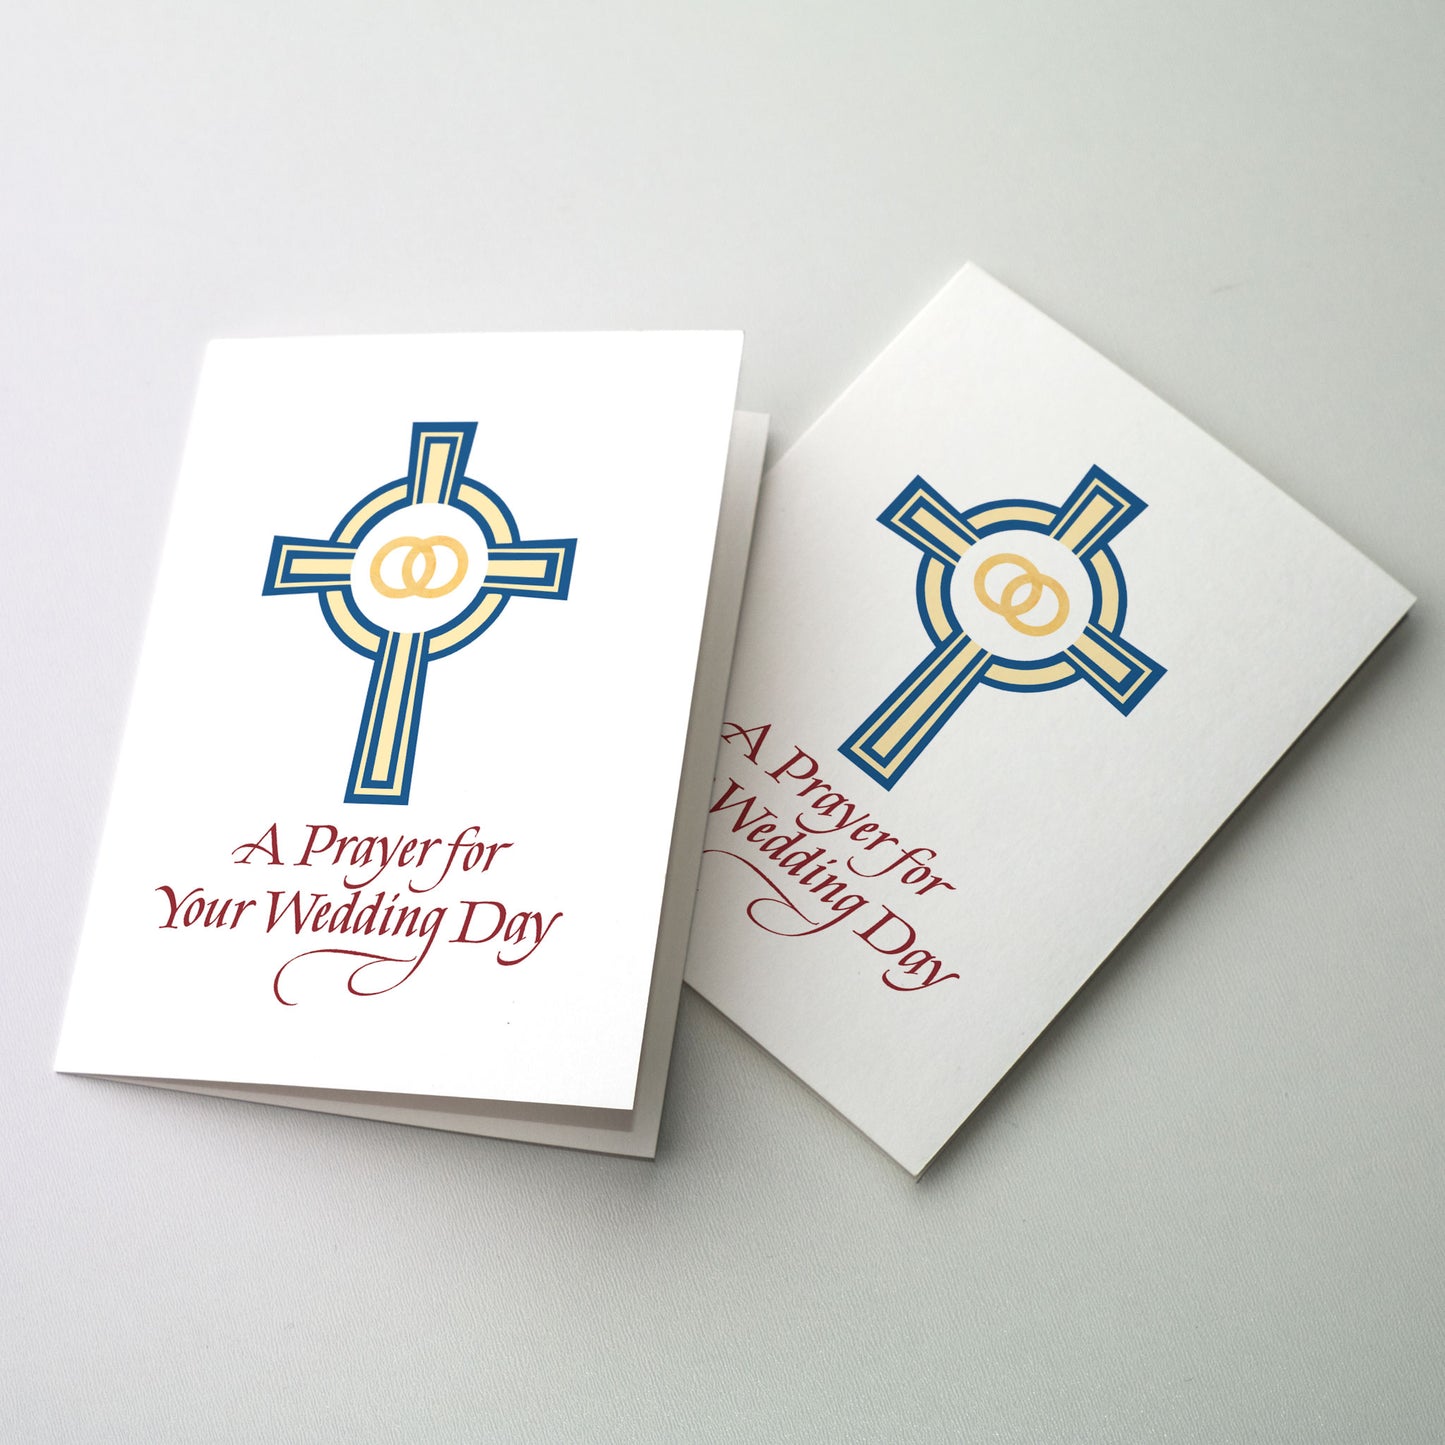 A Prayer for Your Wedding Day - Wedding Congratulations Card